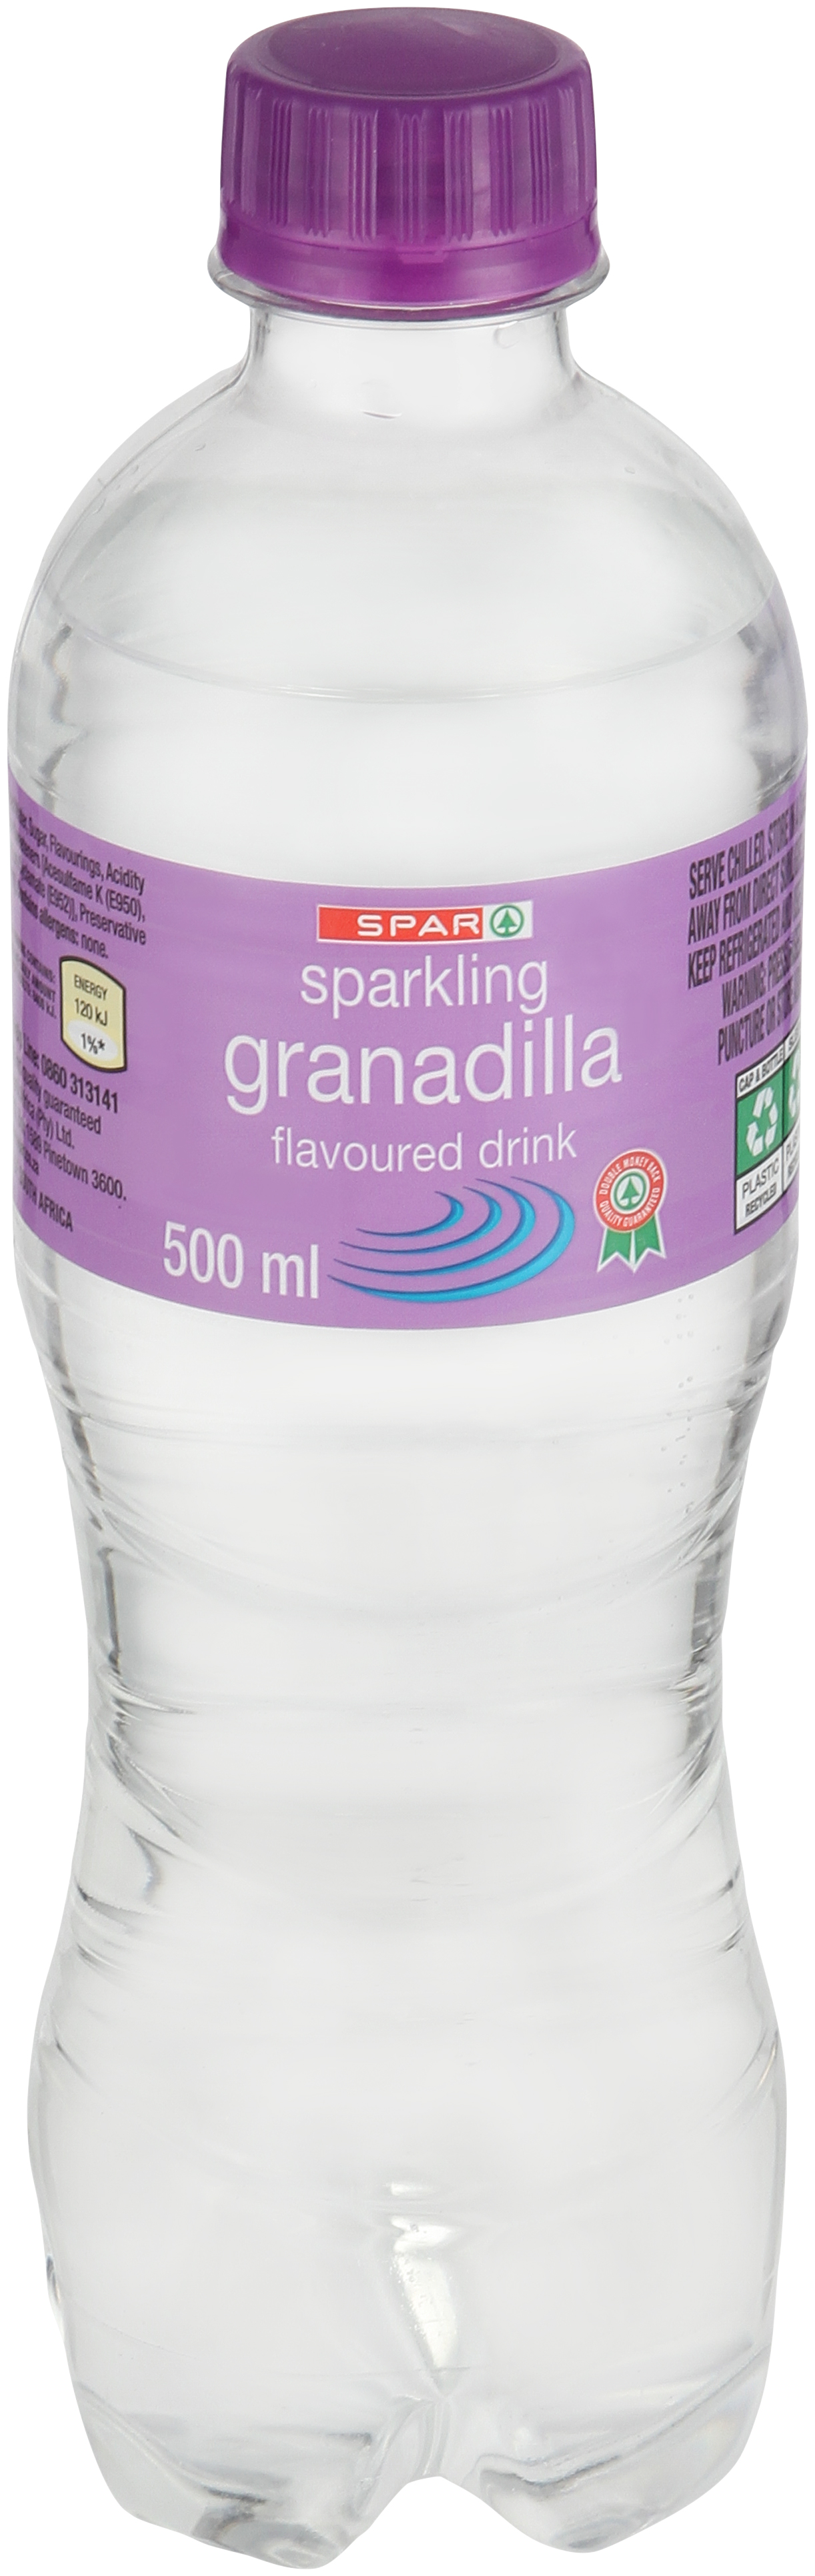 sparkling flavoured drink granadilla